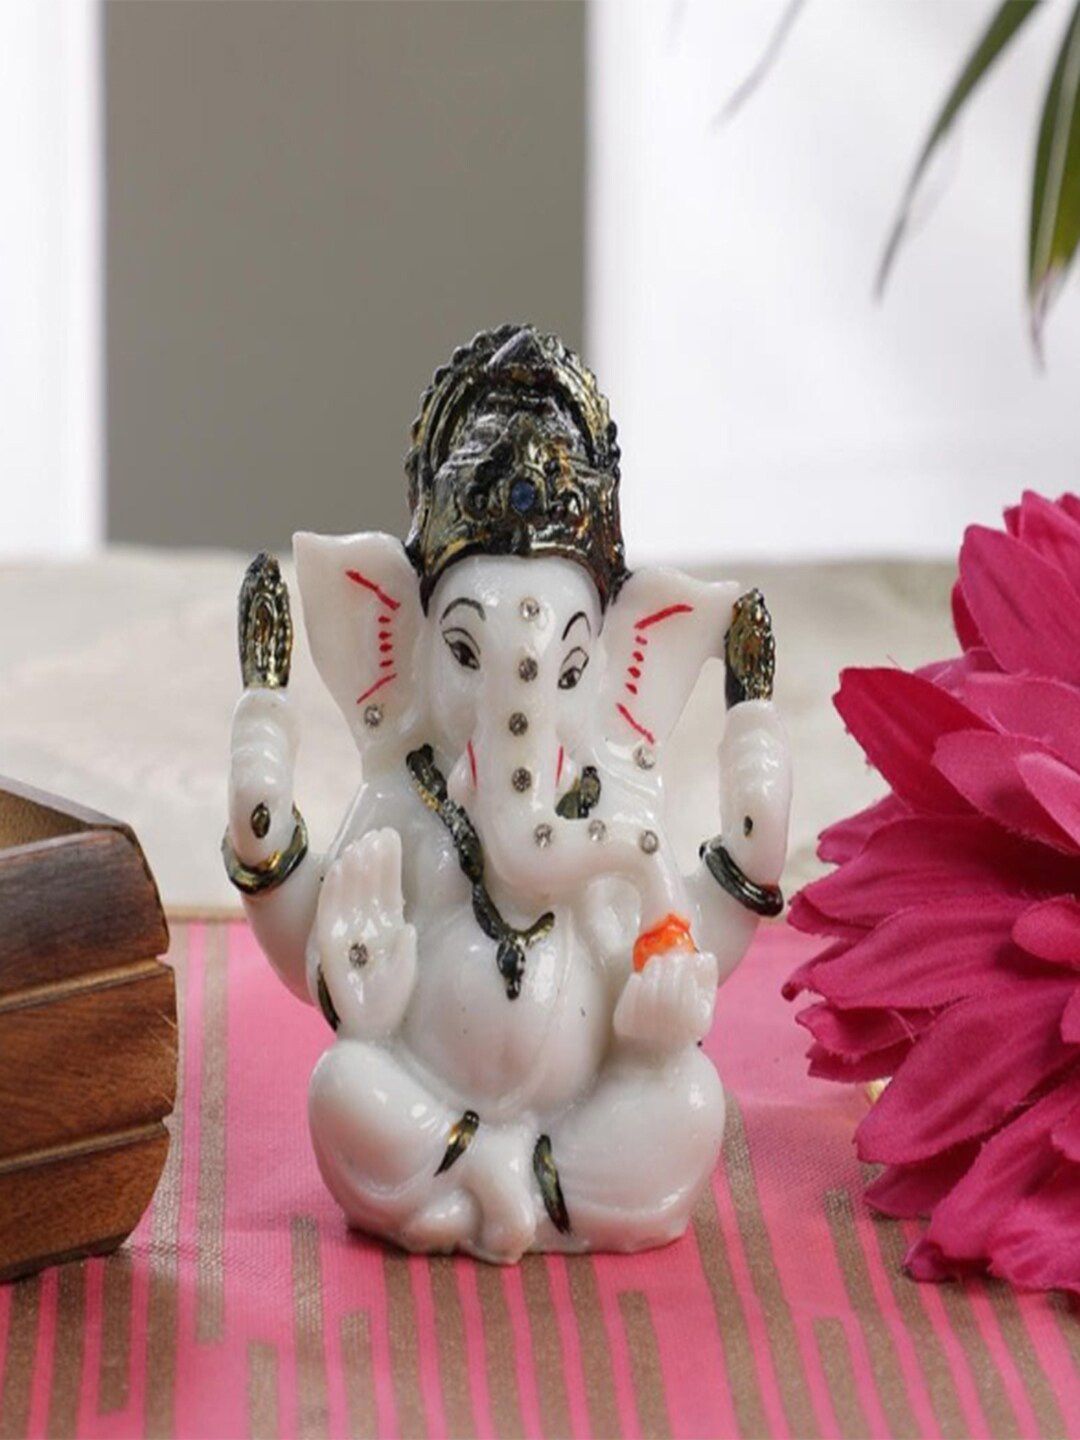 Gallery99 White Lord Ganpati Idol Showpiece Price in India